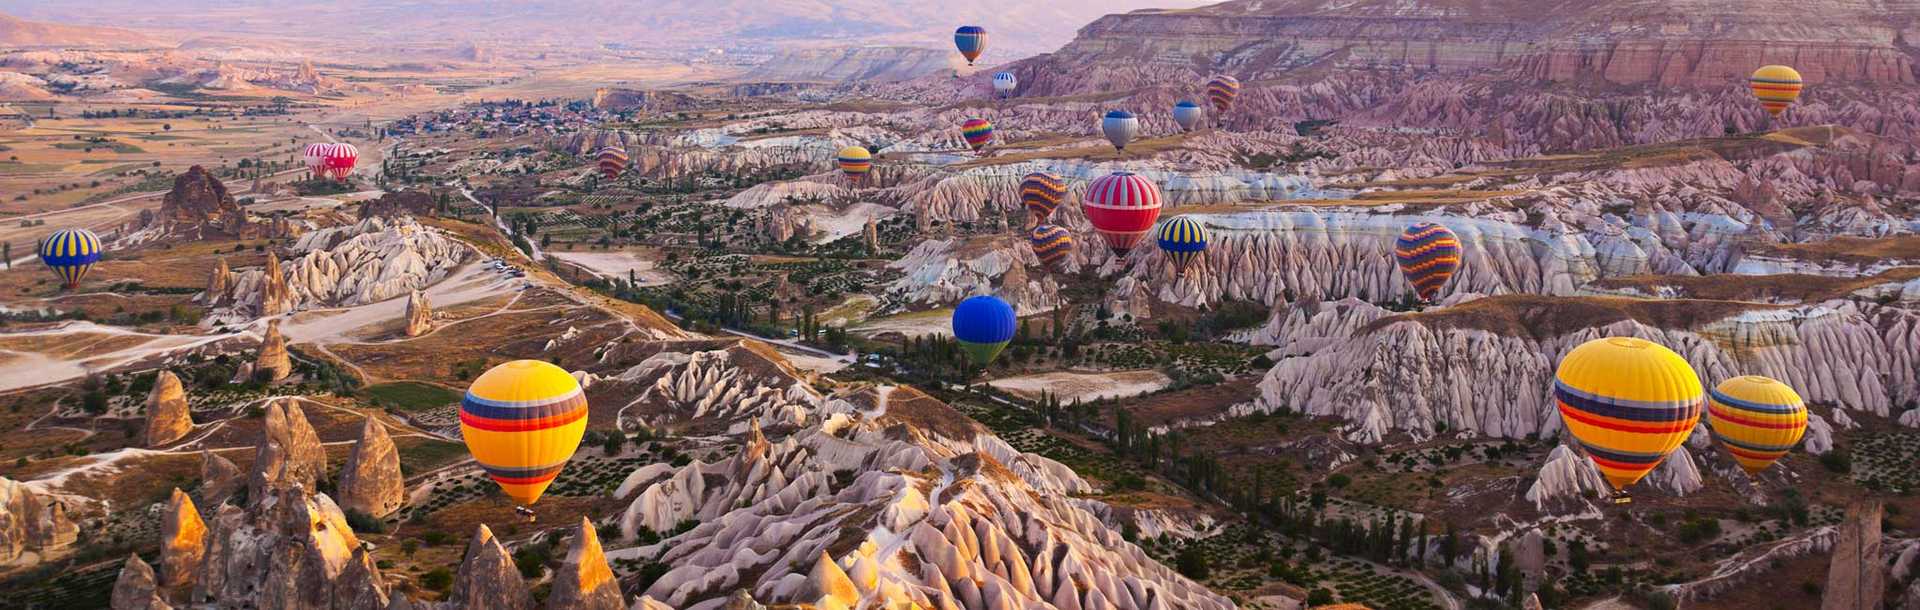 Turkey Tour - Balloons launching over Cappadocia